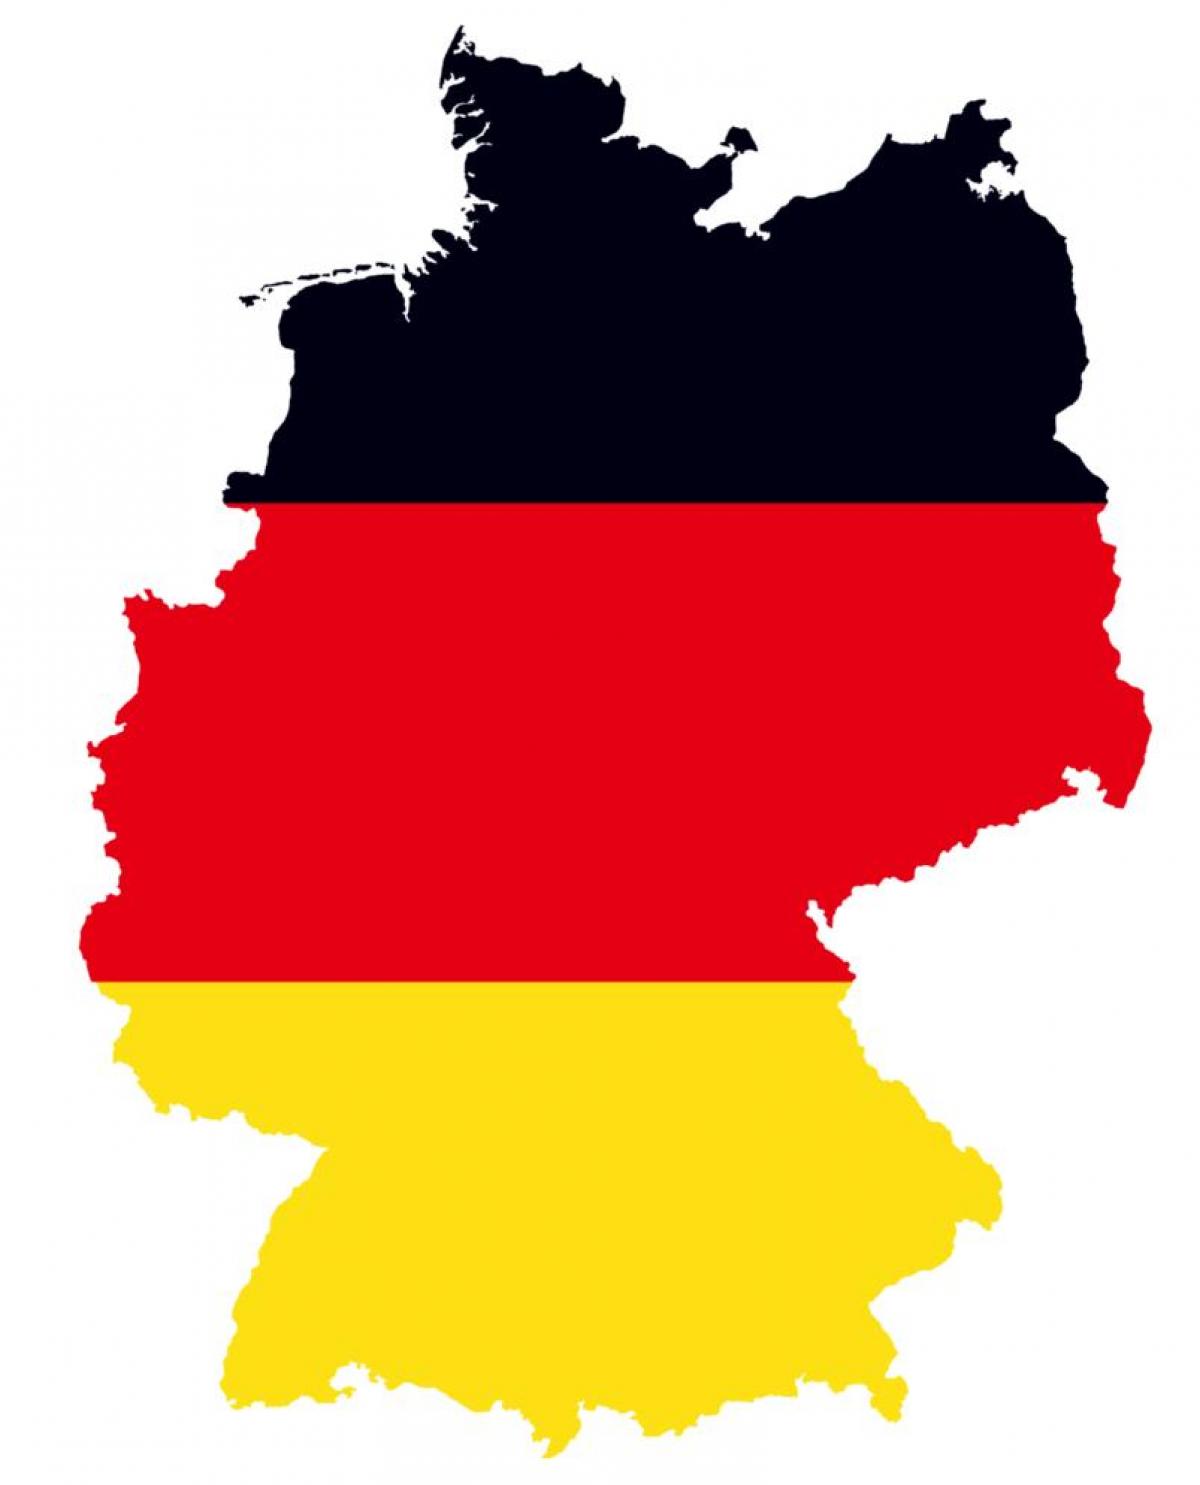 Tyskland kort og flag Kort over Tyskland flag (det Vestlige Europa